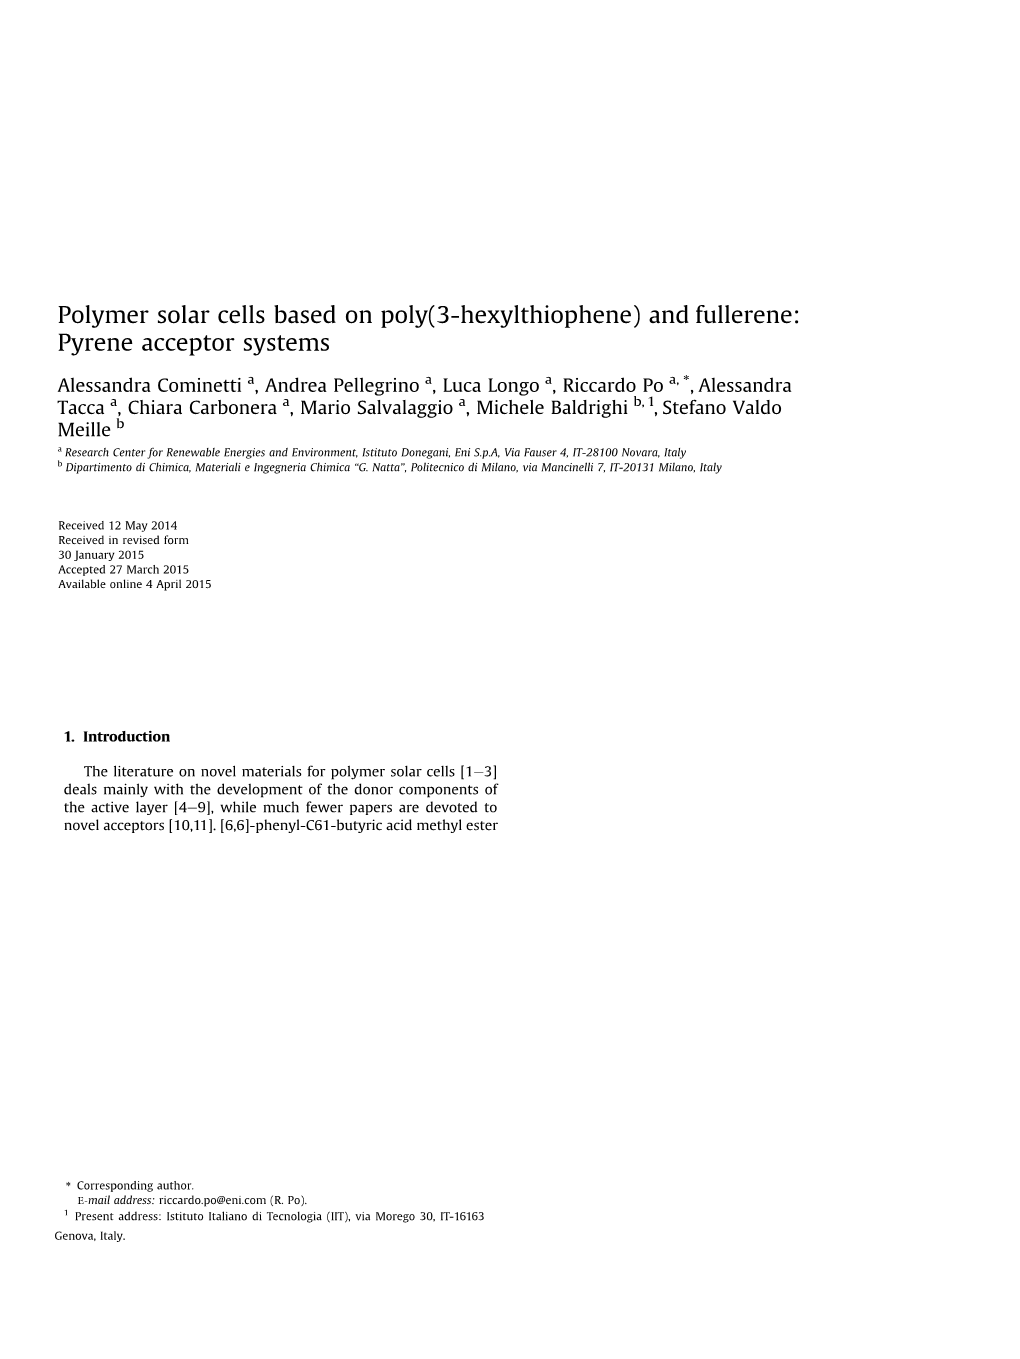 Polymer Solar Cells Based on Poly(3-Hexylthiophene) and Fullerene: Pyrene Acceptor Systems